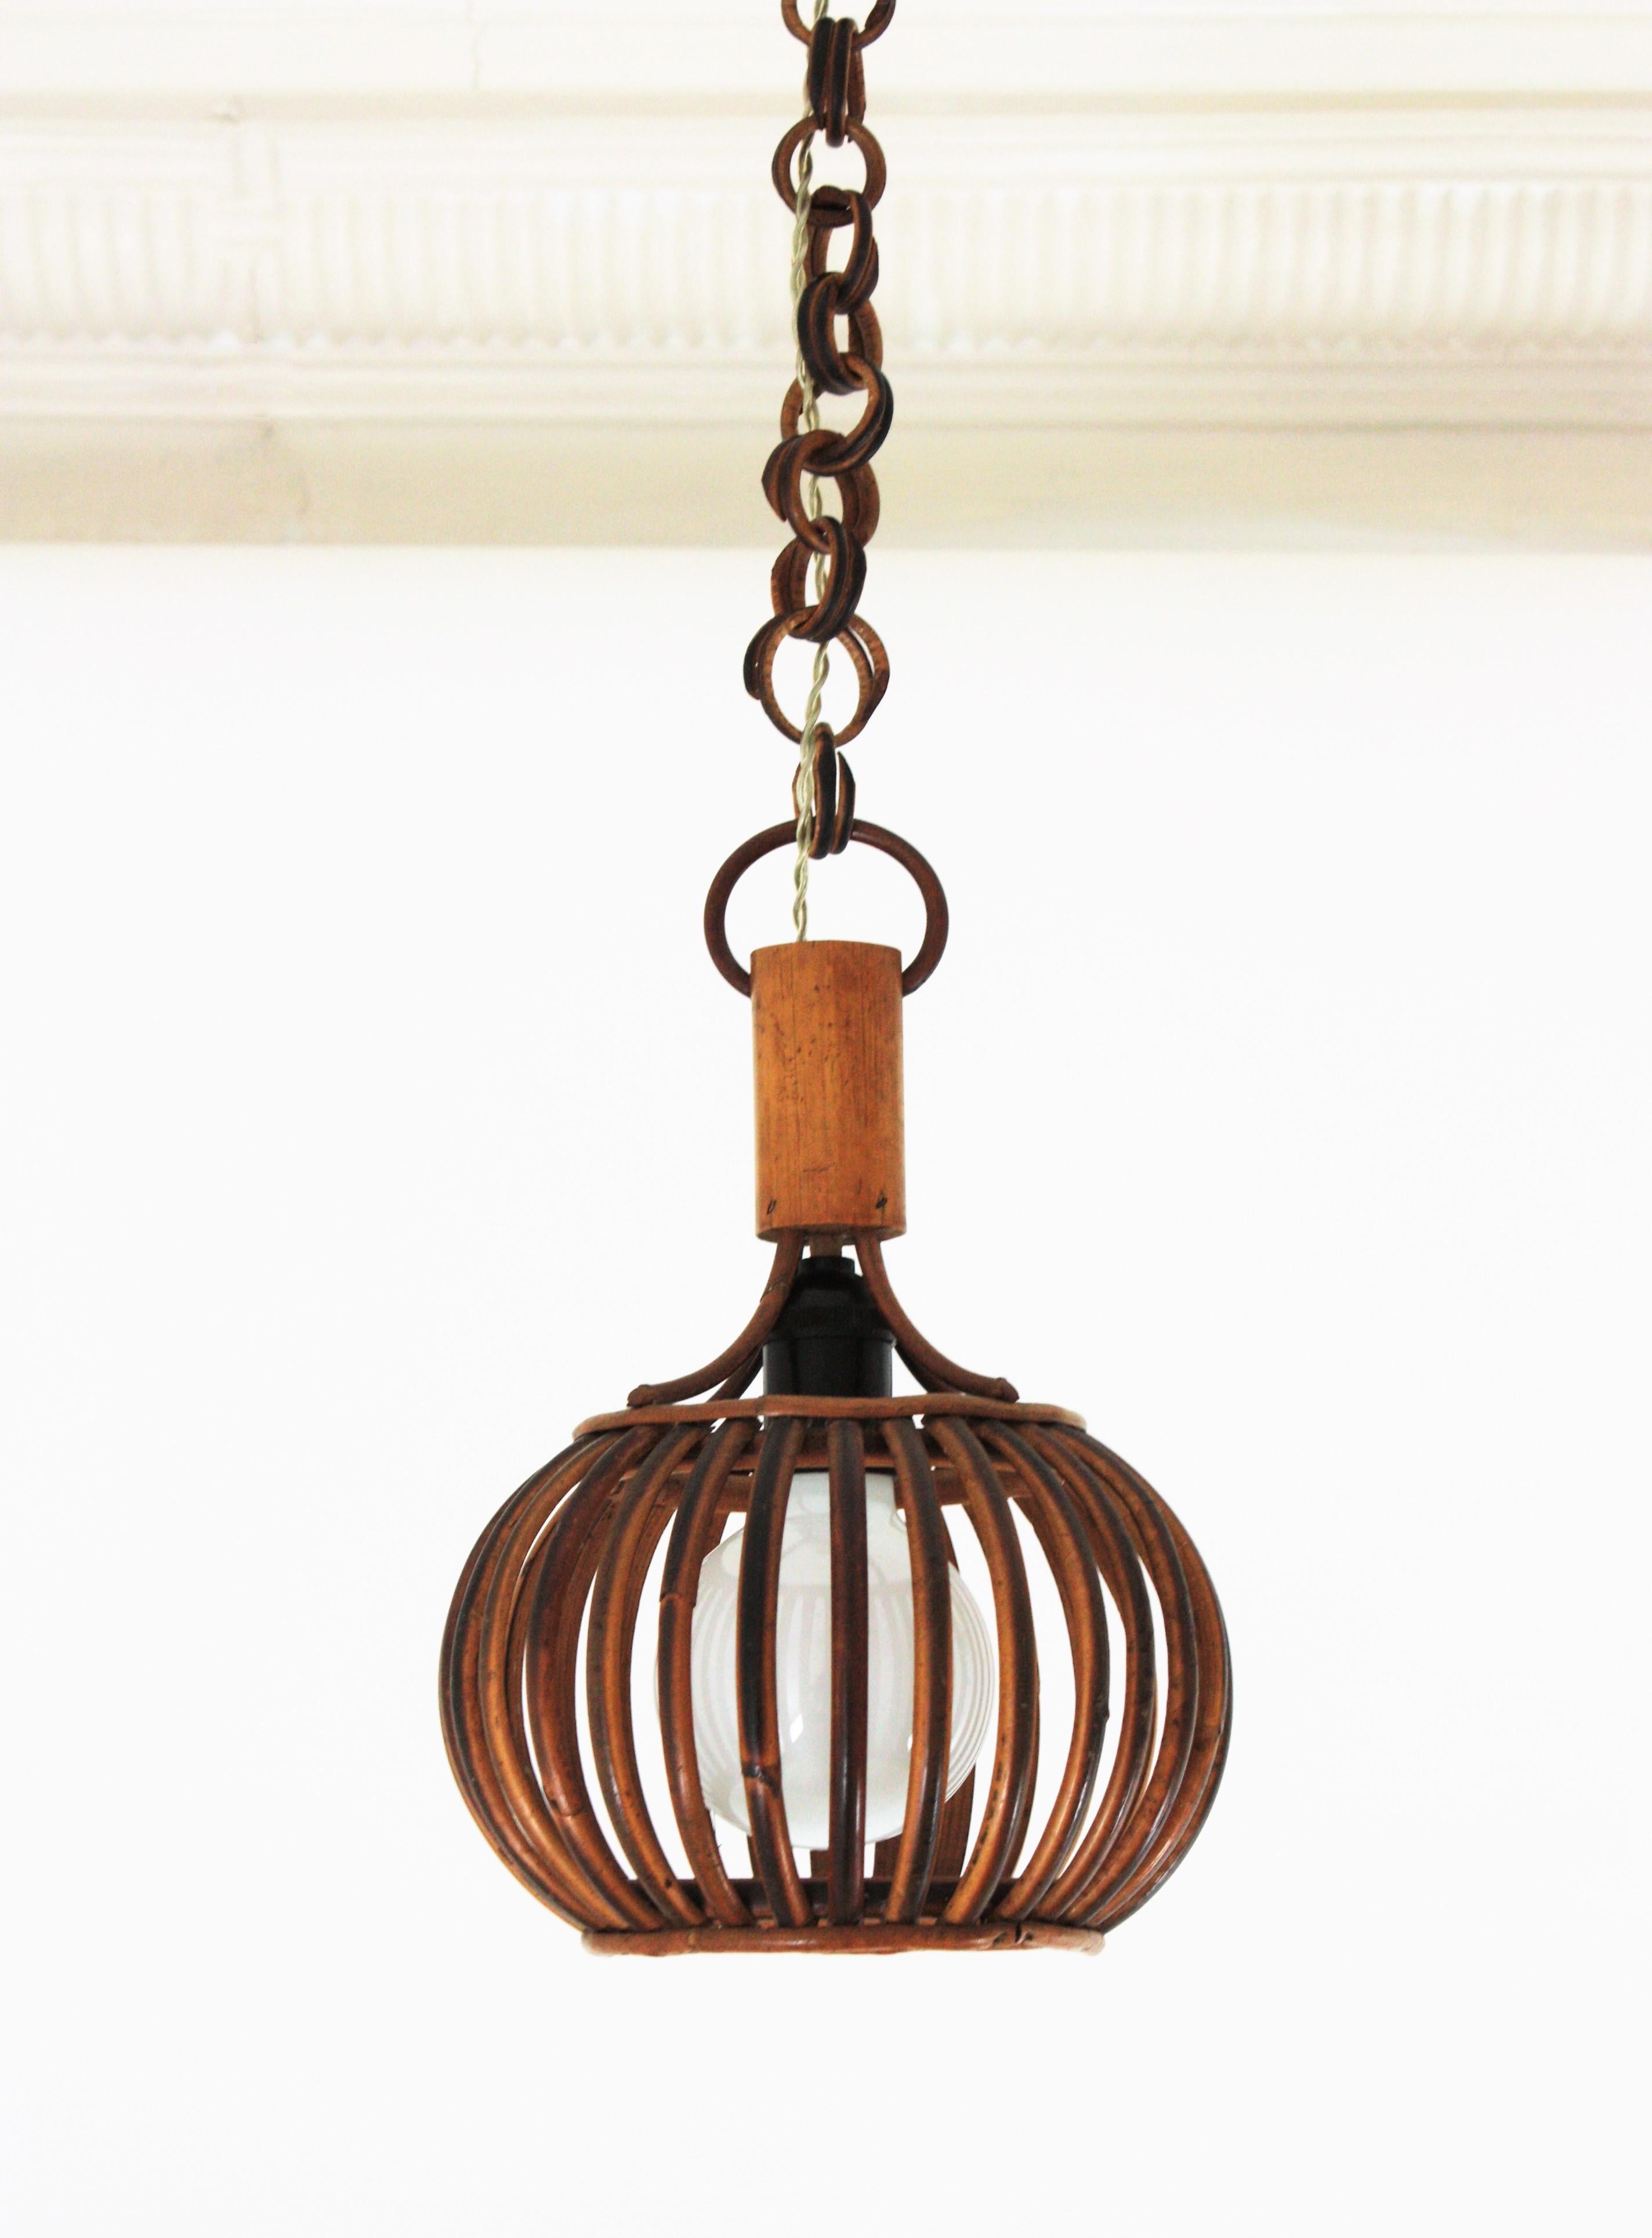 Louis Sognot Rattan Pendant Hanging Light / Lantern, 1950s For Sale 3